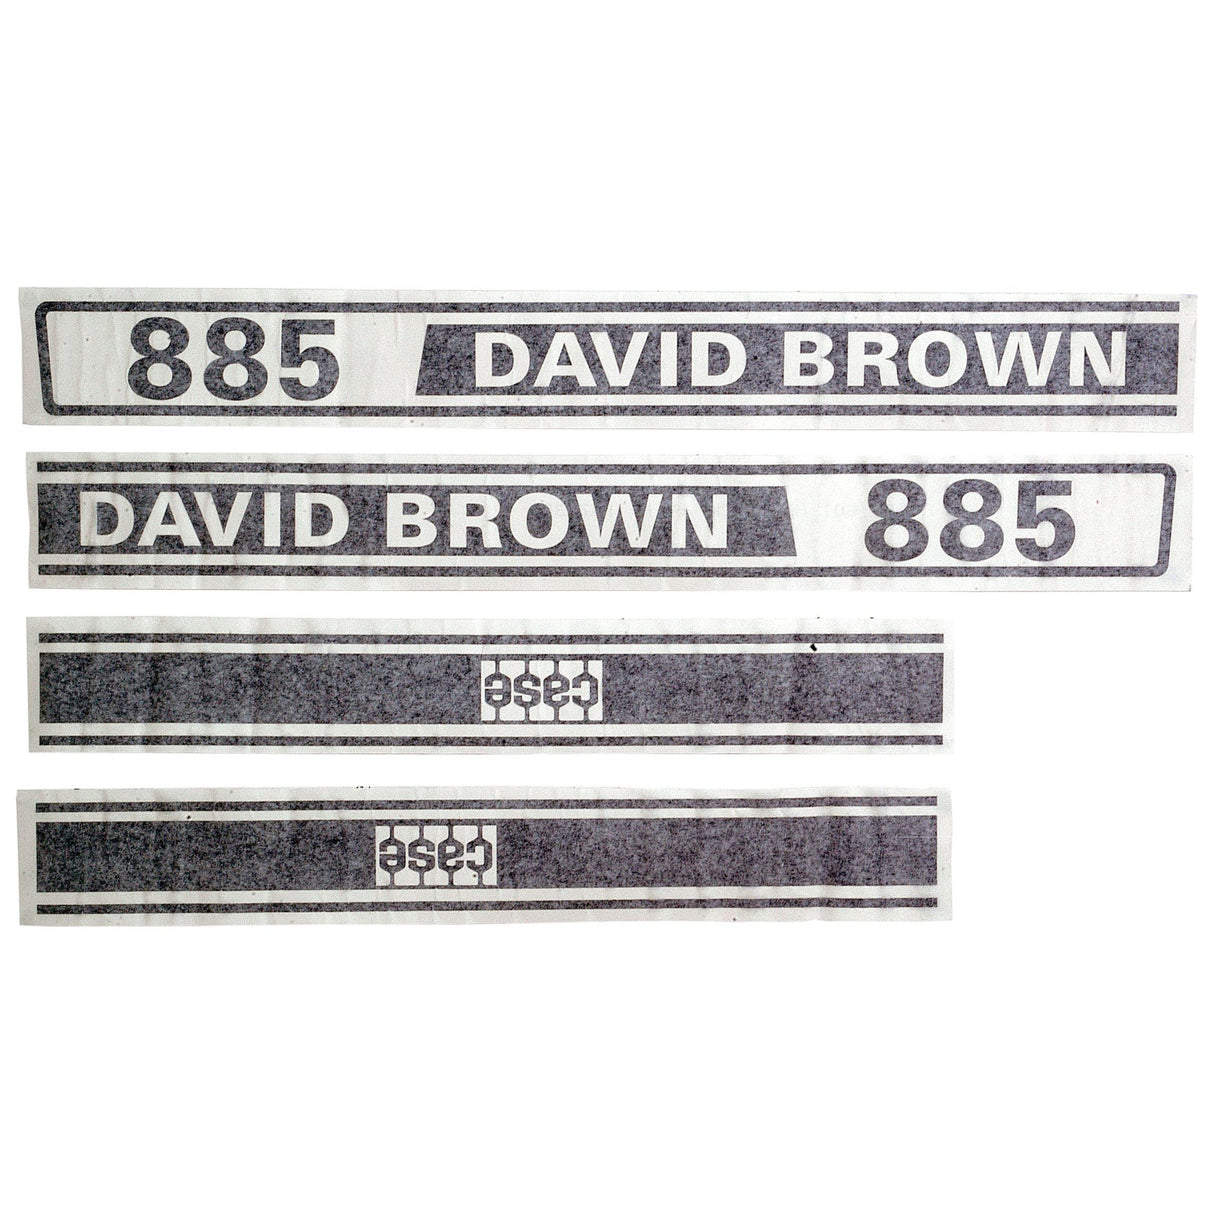 Decal Set - David Brown 885
 - S.63344 - Farming Parts